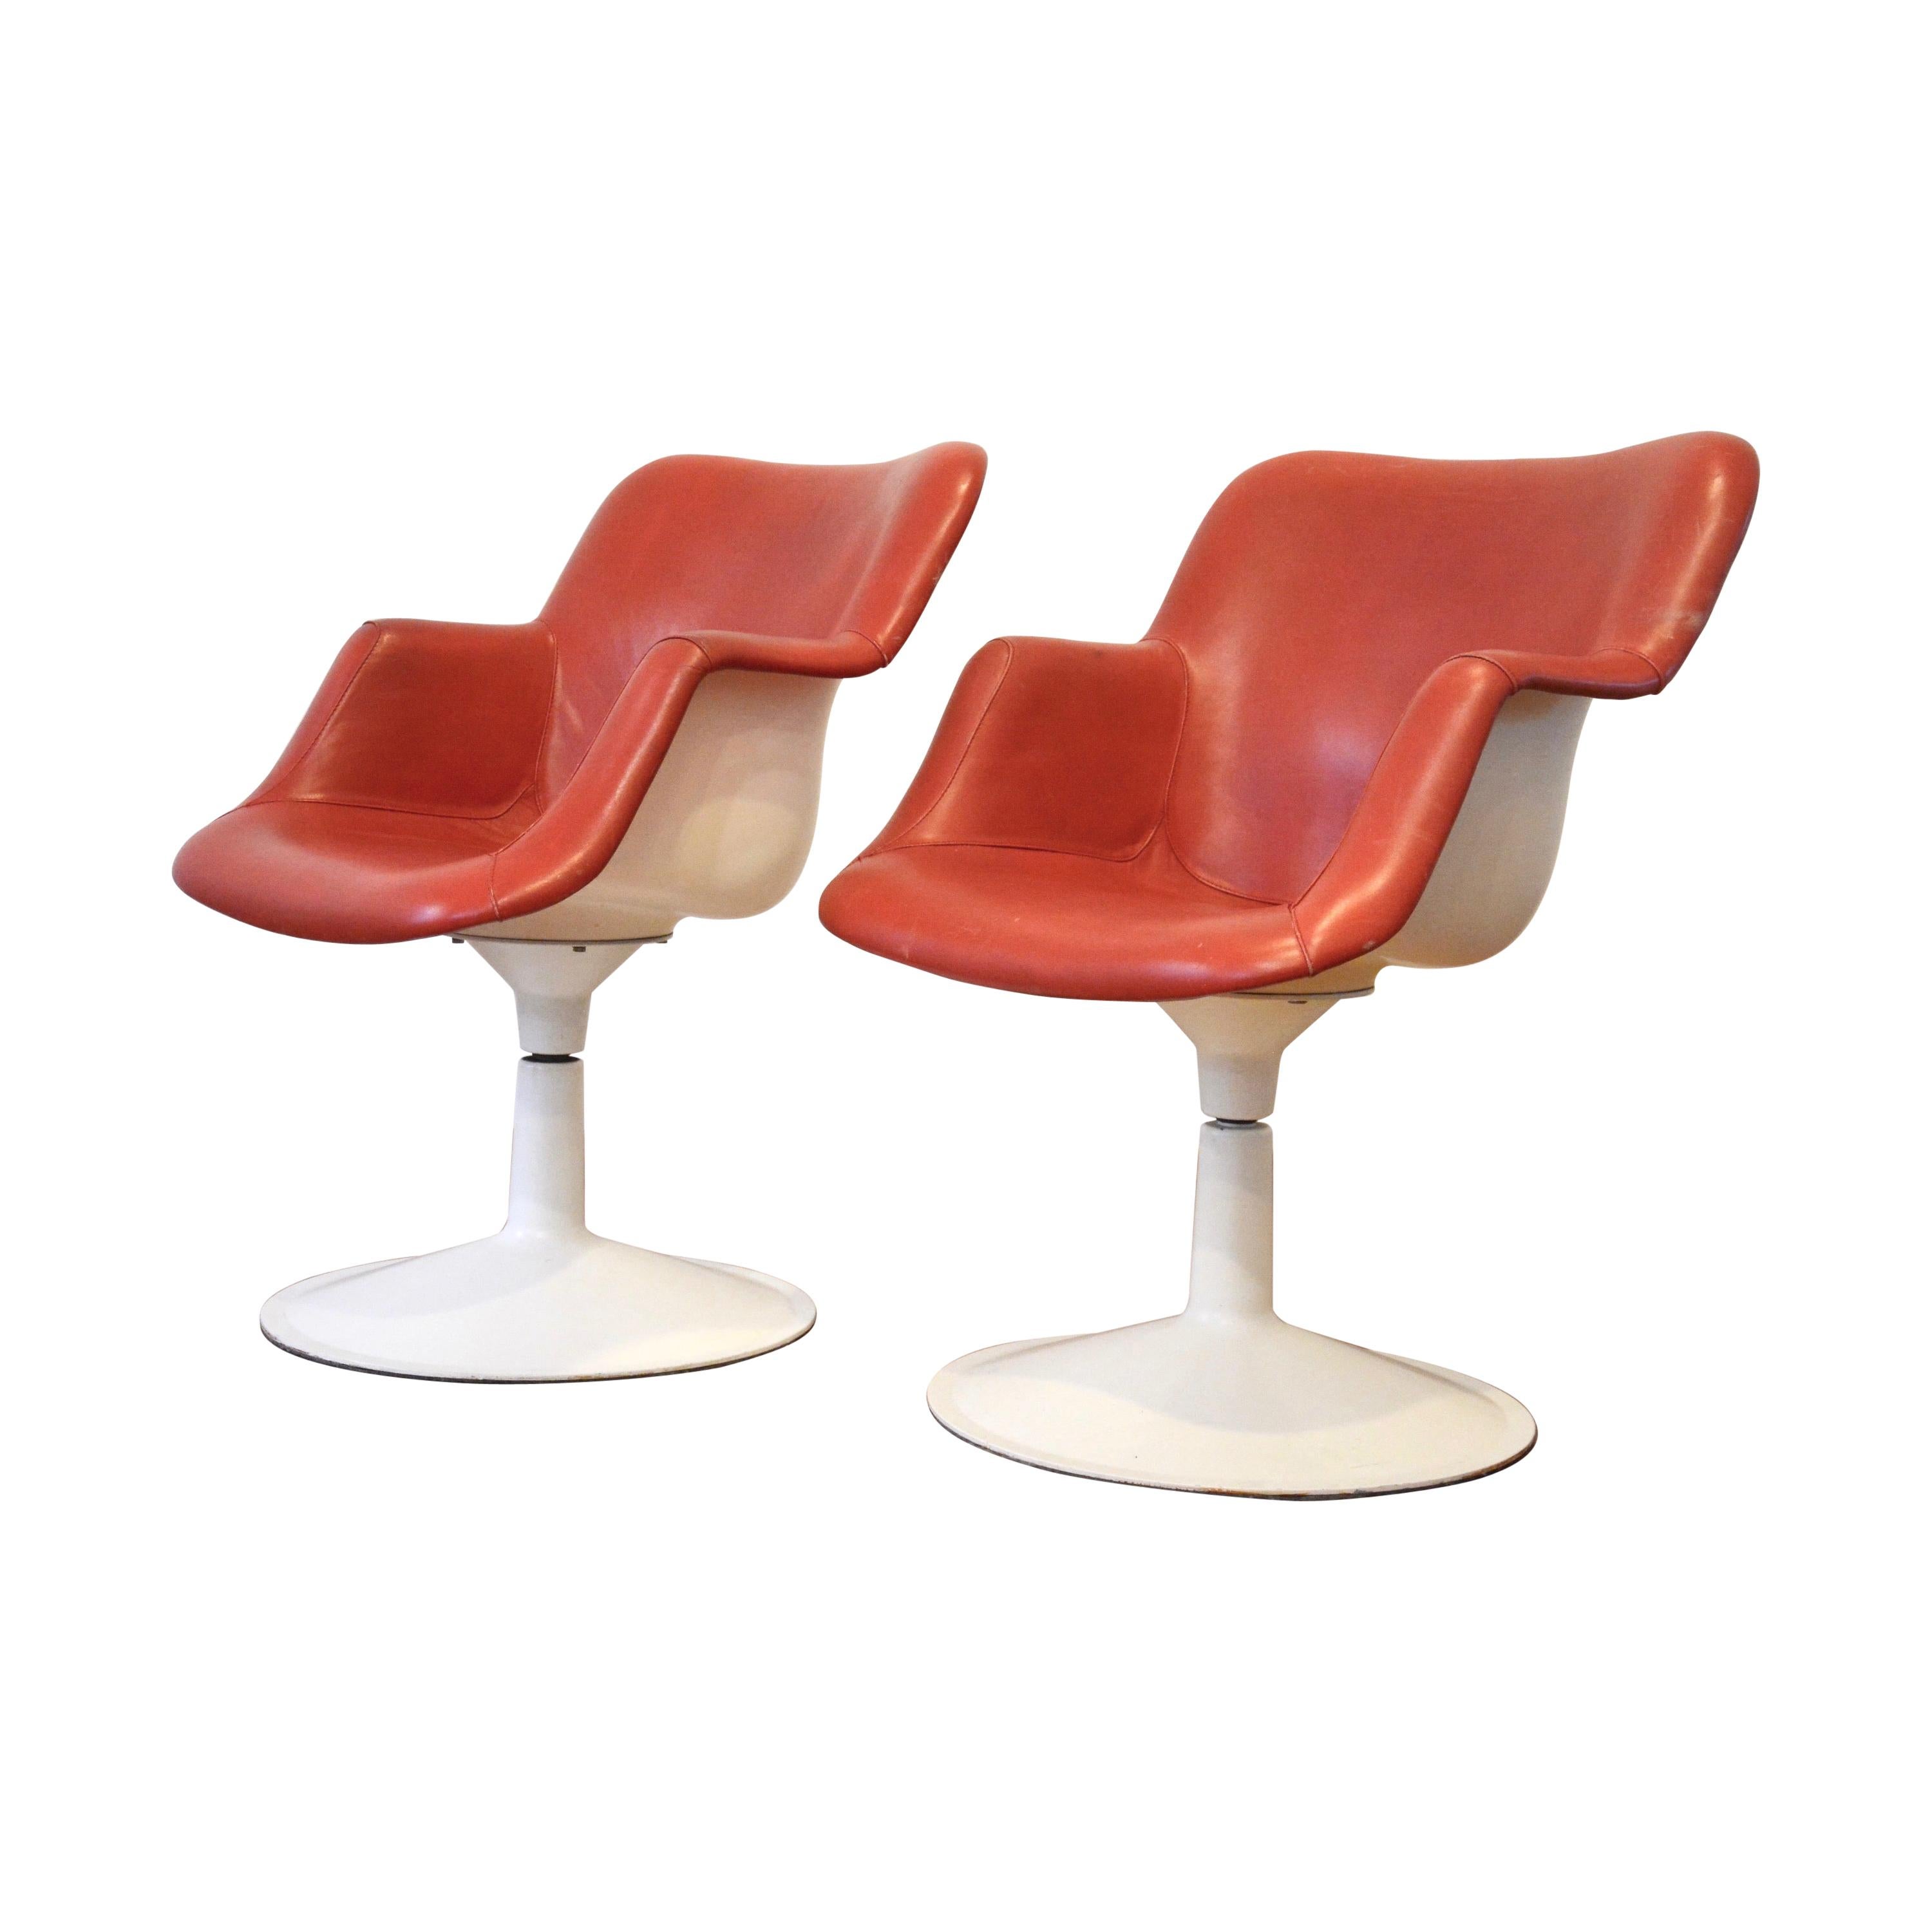 2 Scandinavian Midcentury Swivel Chairs by Yrjö Kukkapuro, Finland, 1960s